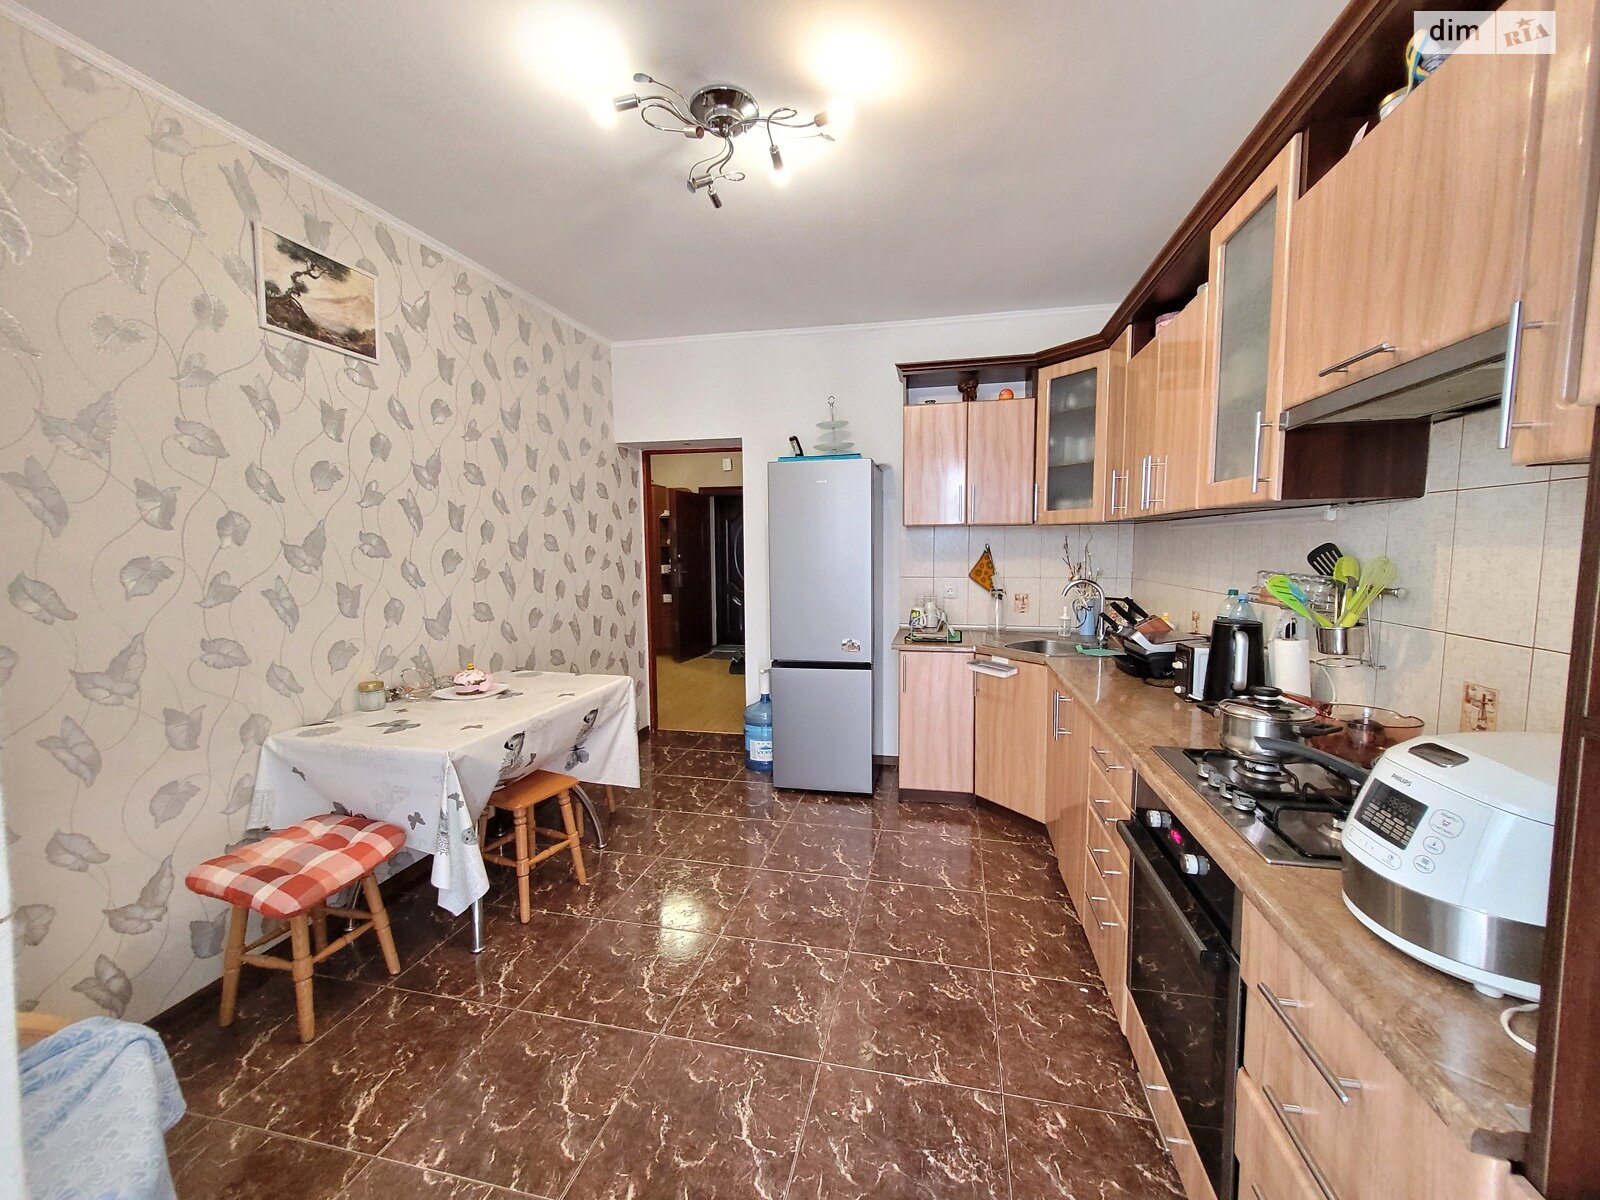 Продажа двухкомнатной квартиры в Луцке, на ул. Кравчука, фото 1